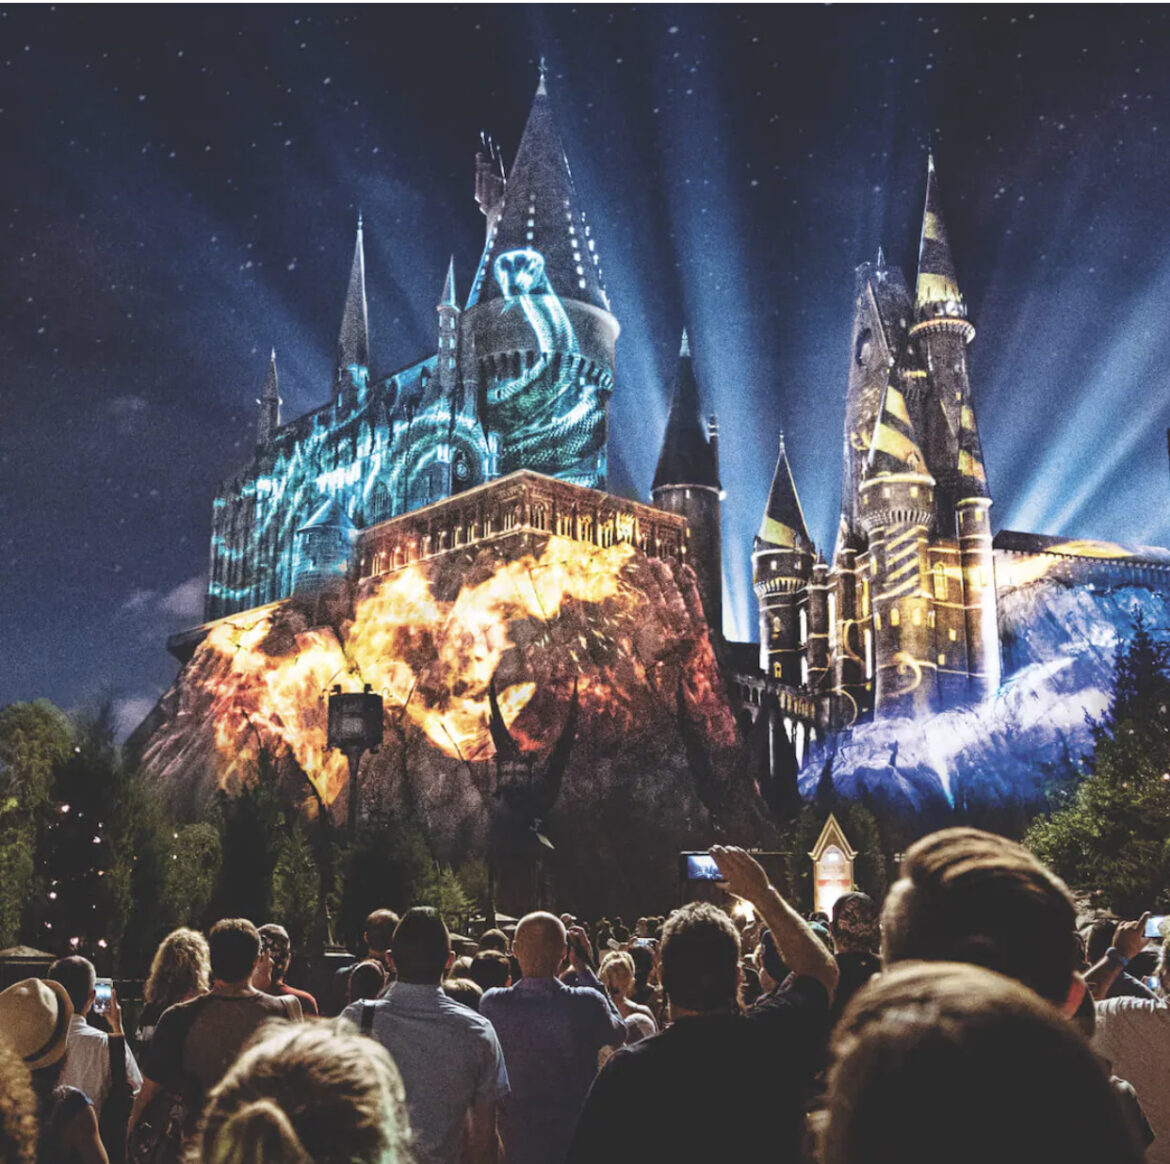 The Nighttime Lights At Hogwarts Castle Returns Tomorrow at Universal Orlando